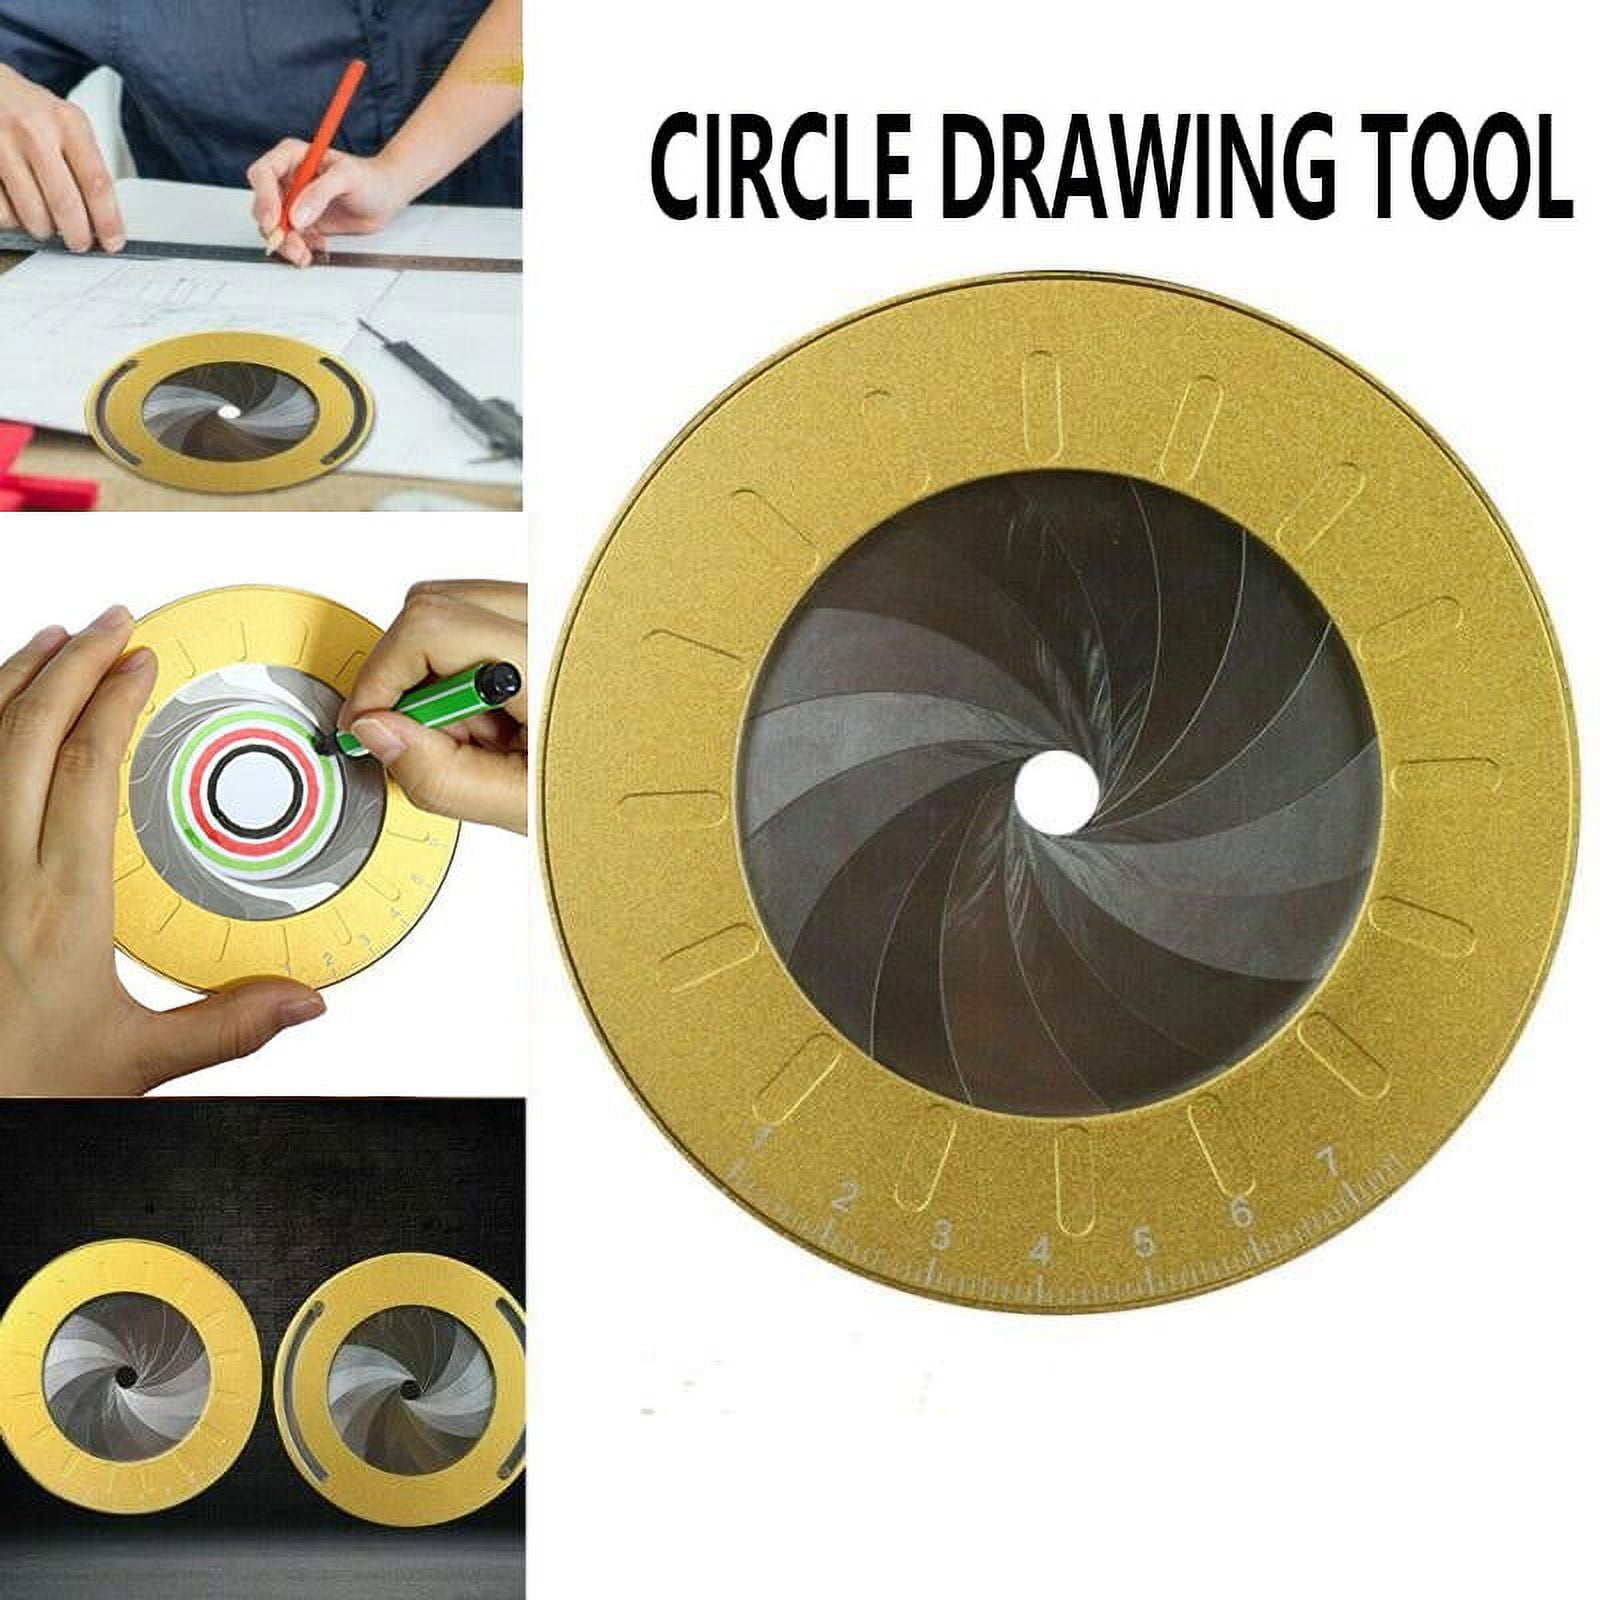 Lnkoo Circle Drawing Tool,Adjustable Flexible Rotary Aluminum Alloy Drawing Circles Geometric Tool,Round Circle Template Ruler for Drafting Alloy